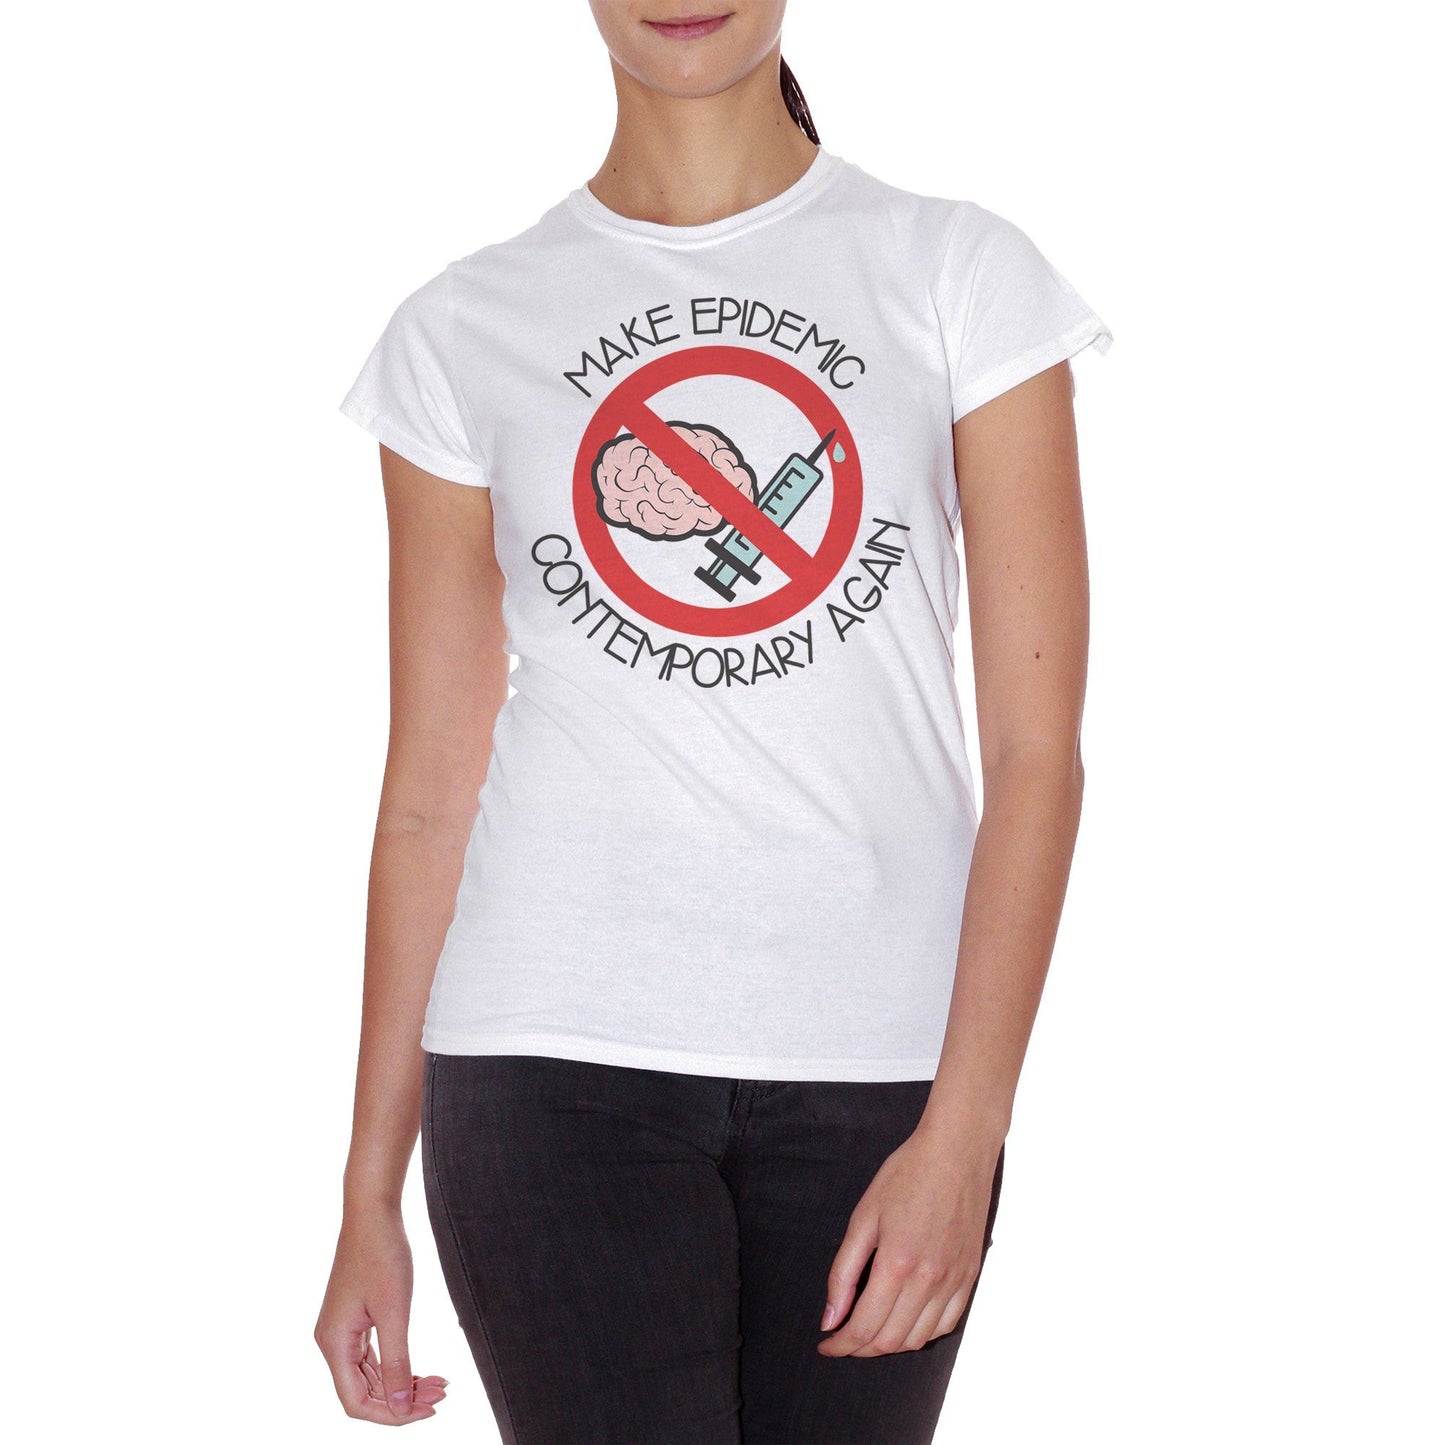 Lavender T-Shirt Make Epidemic Contemporary Again-No Vax Vaccino Epidemia Vaccini - POLITICA CucShop